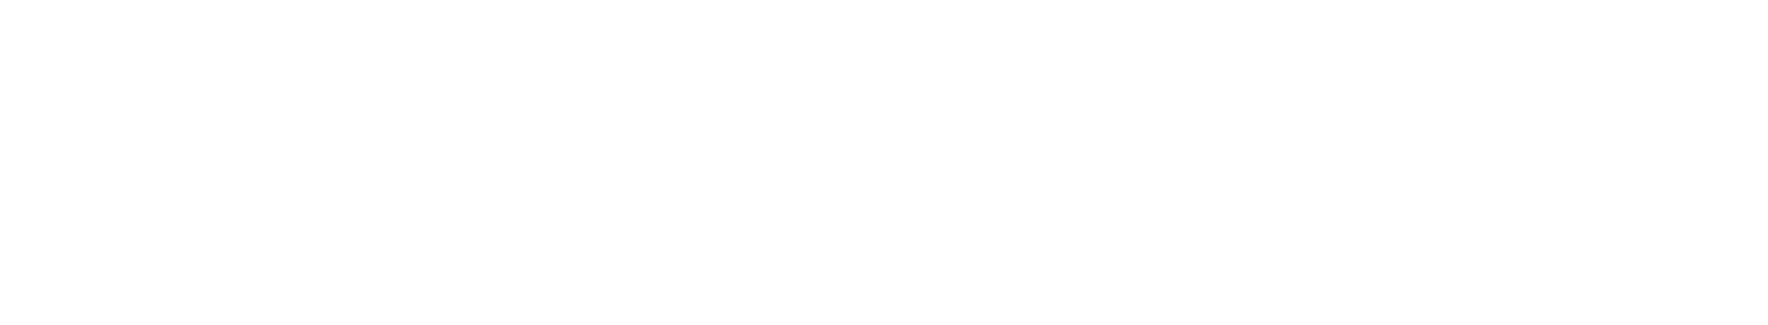 Advertising Benchmark Index